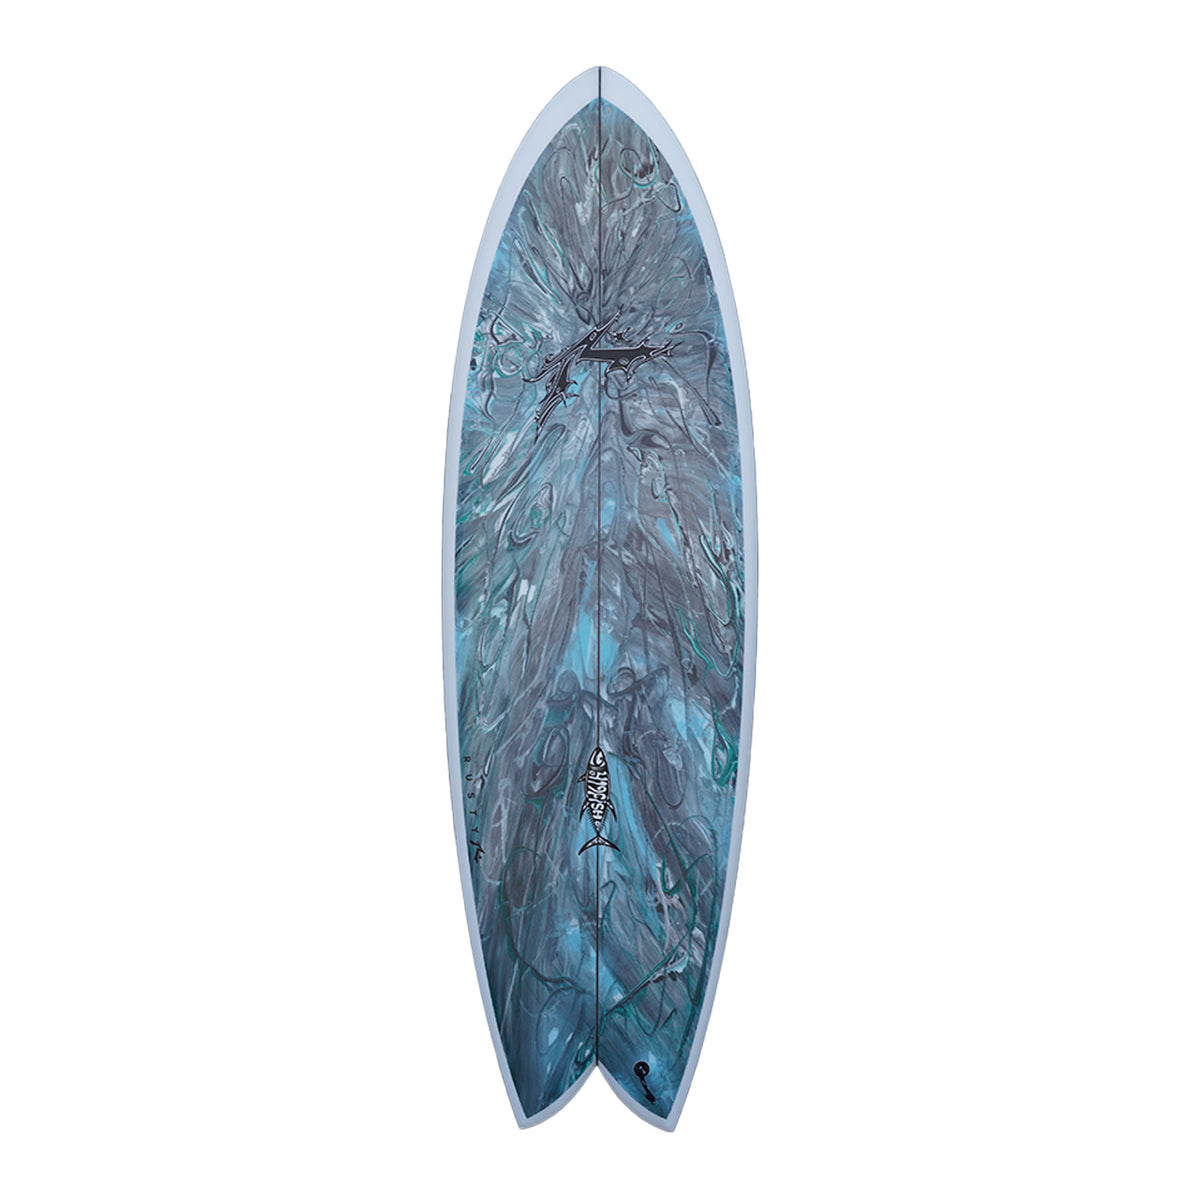 419fish - Alternative - Rusty Surfboards - Top View - Blue Marble Swirl